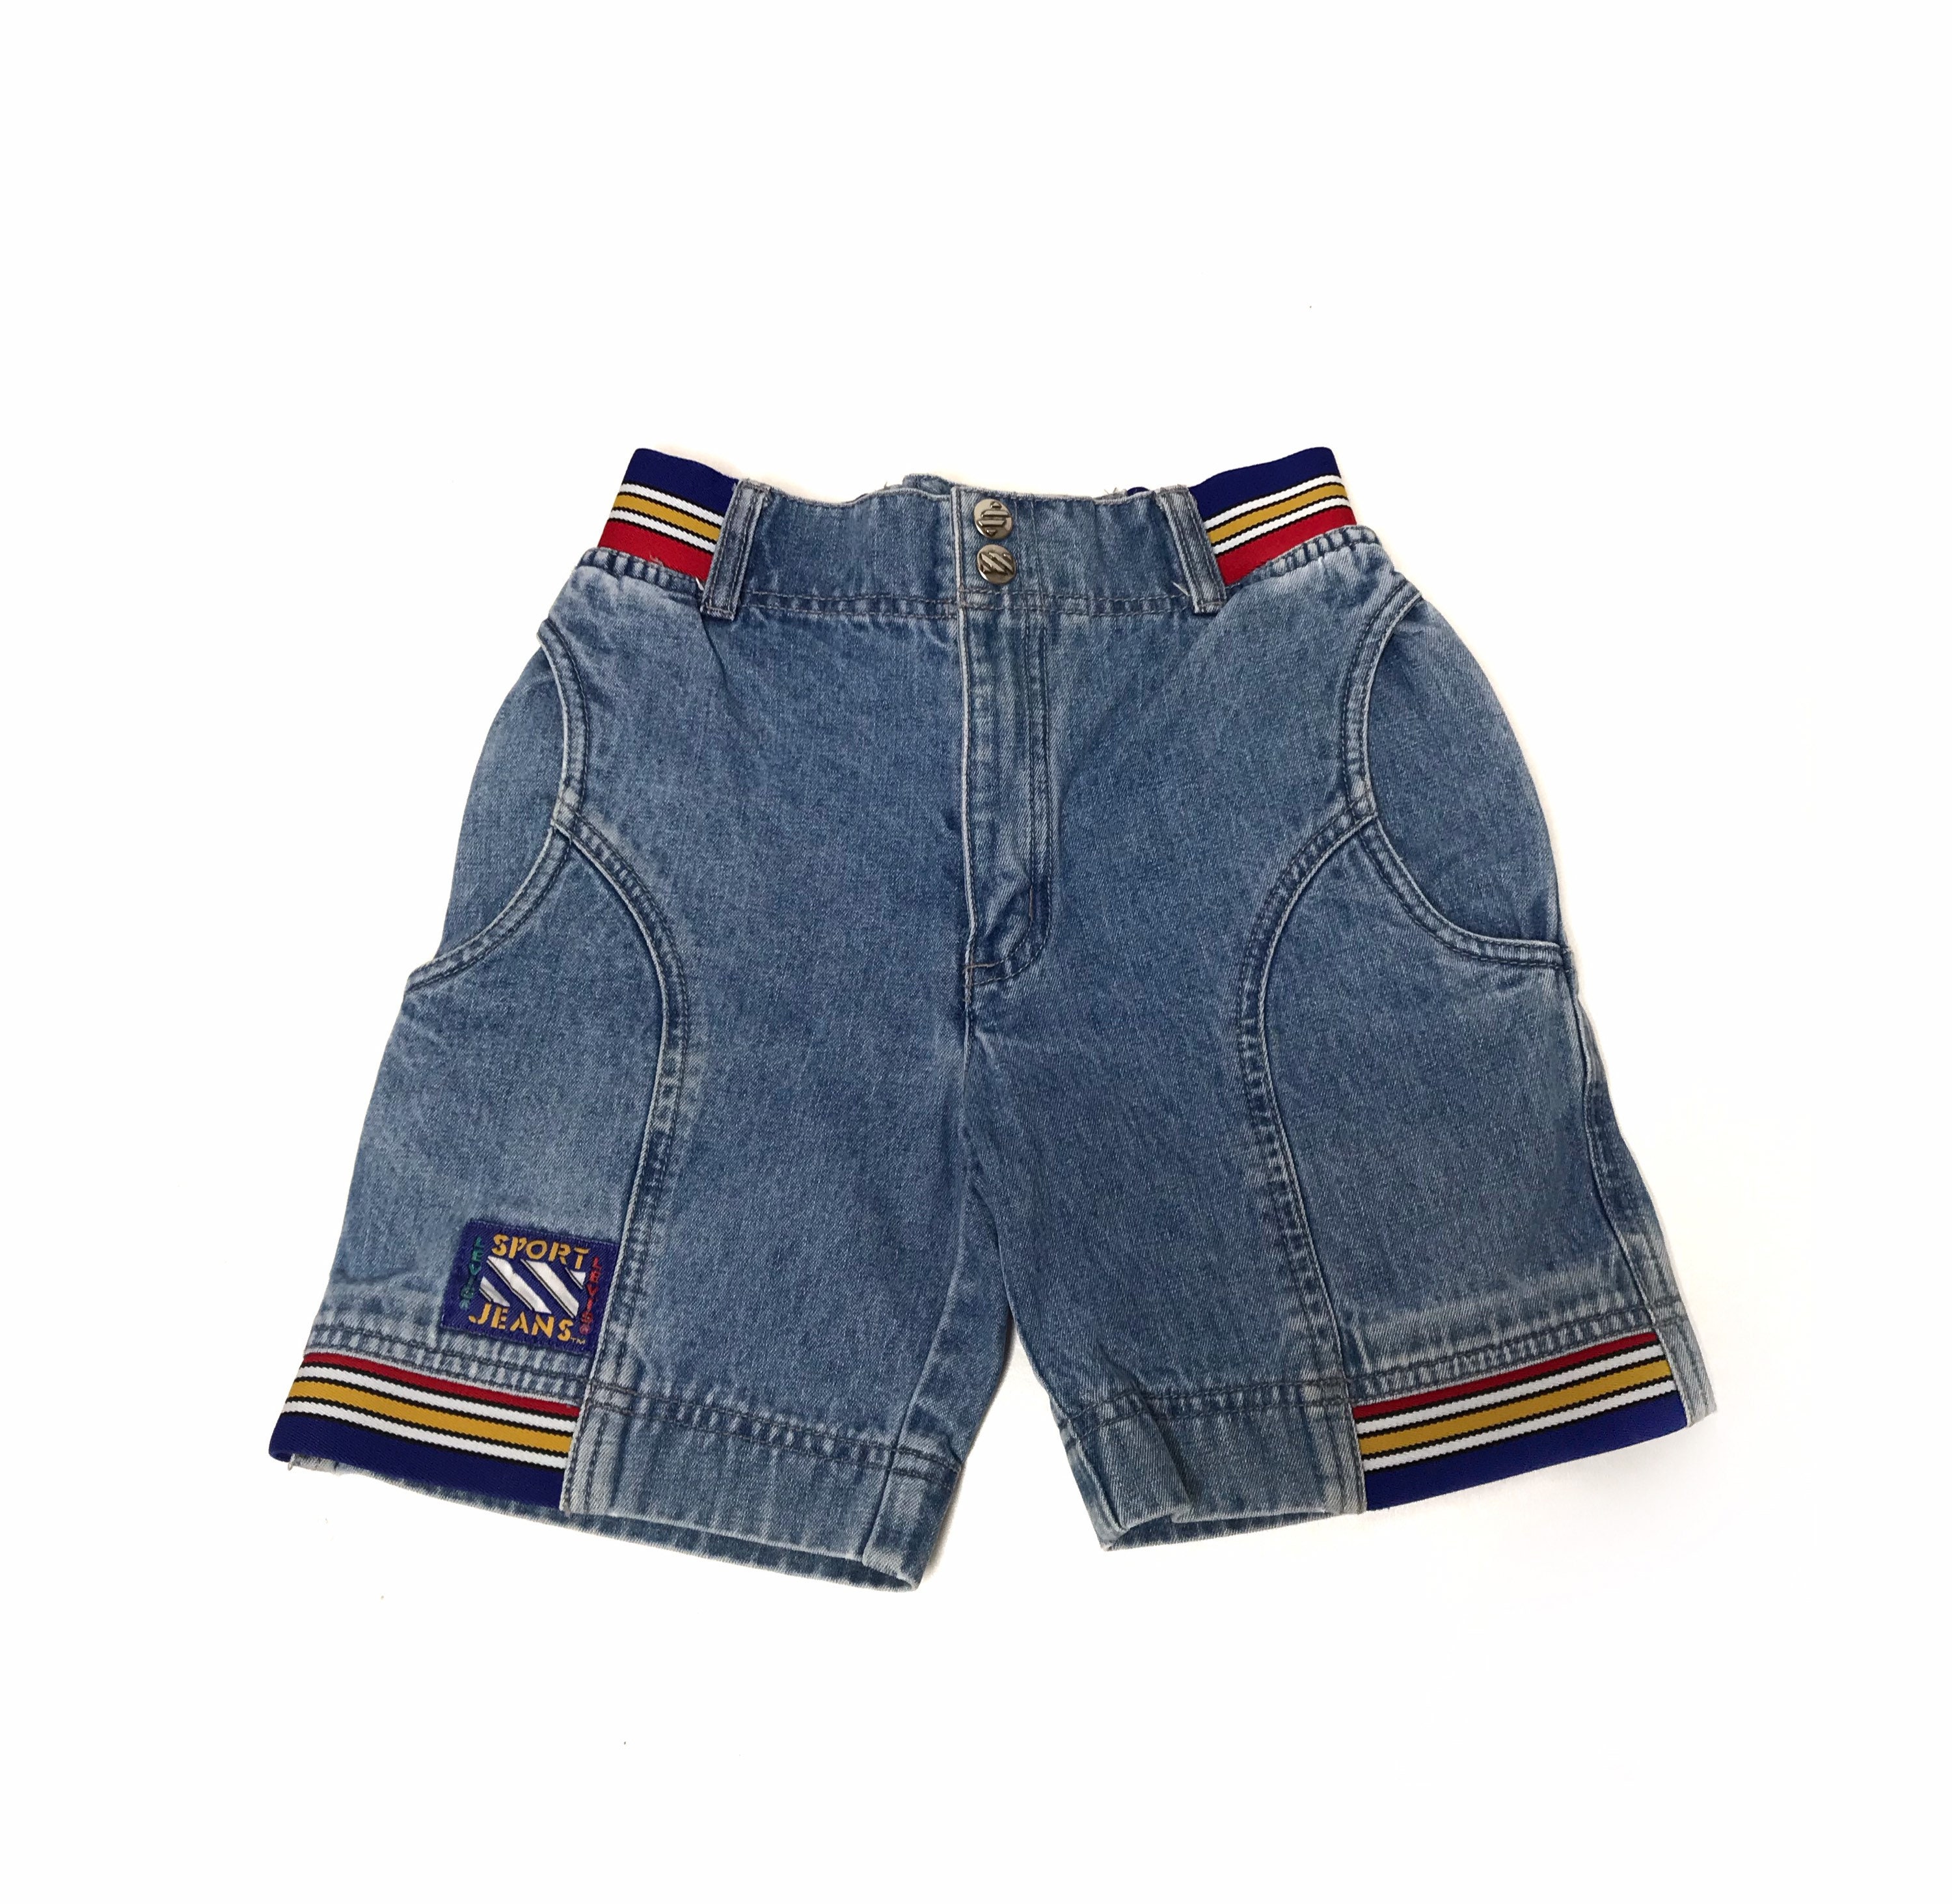 Vintage 90s Levis Sport Jeans shorts denim jorts 1990s boys | Etsy